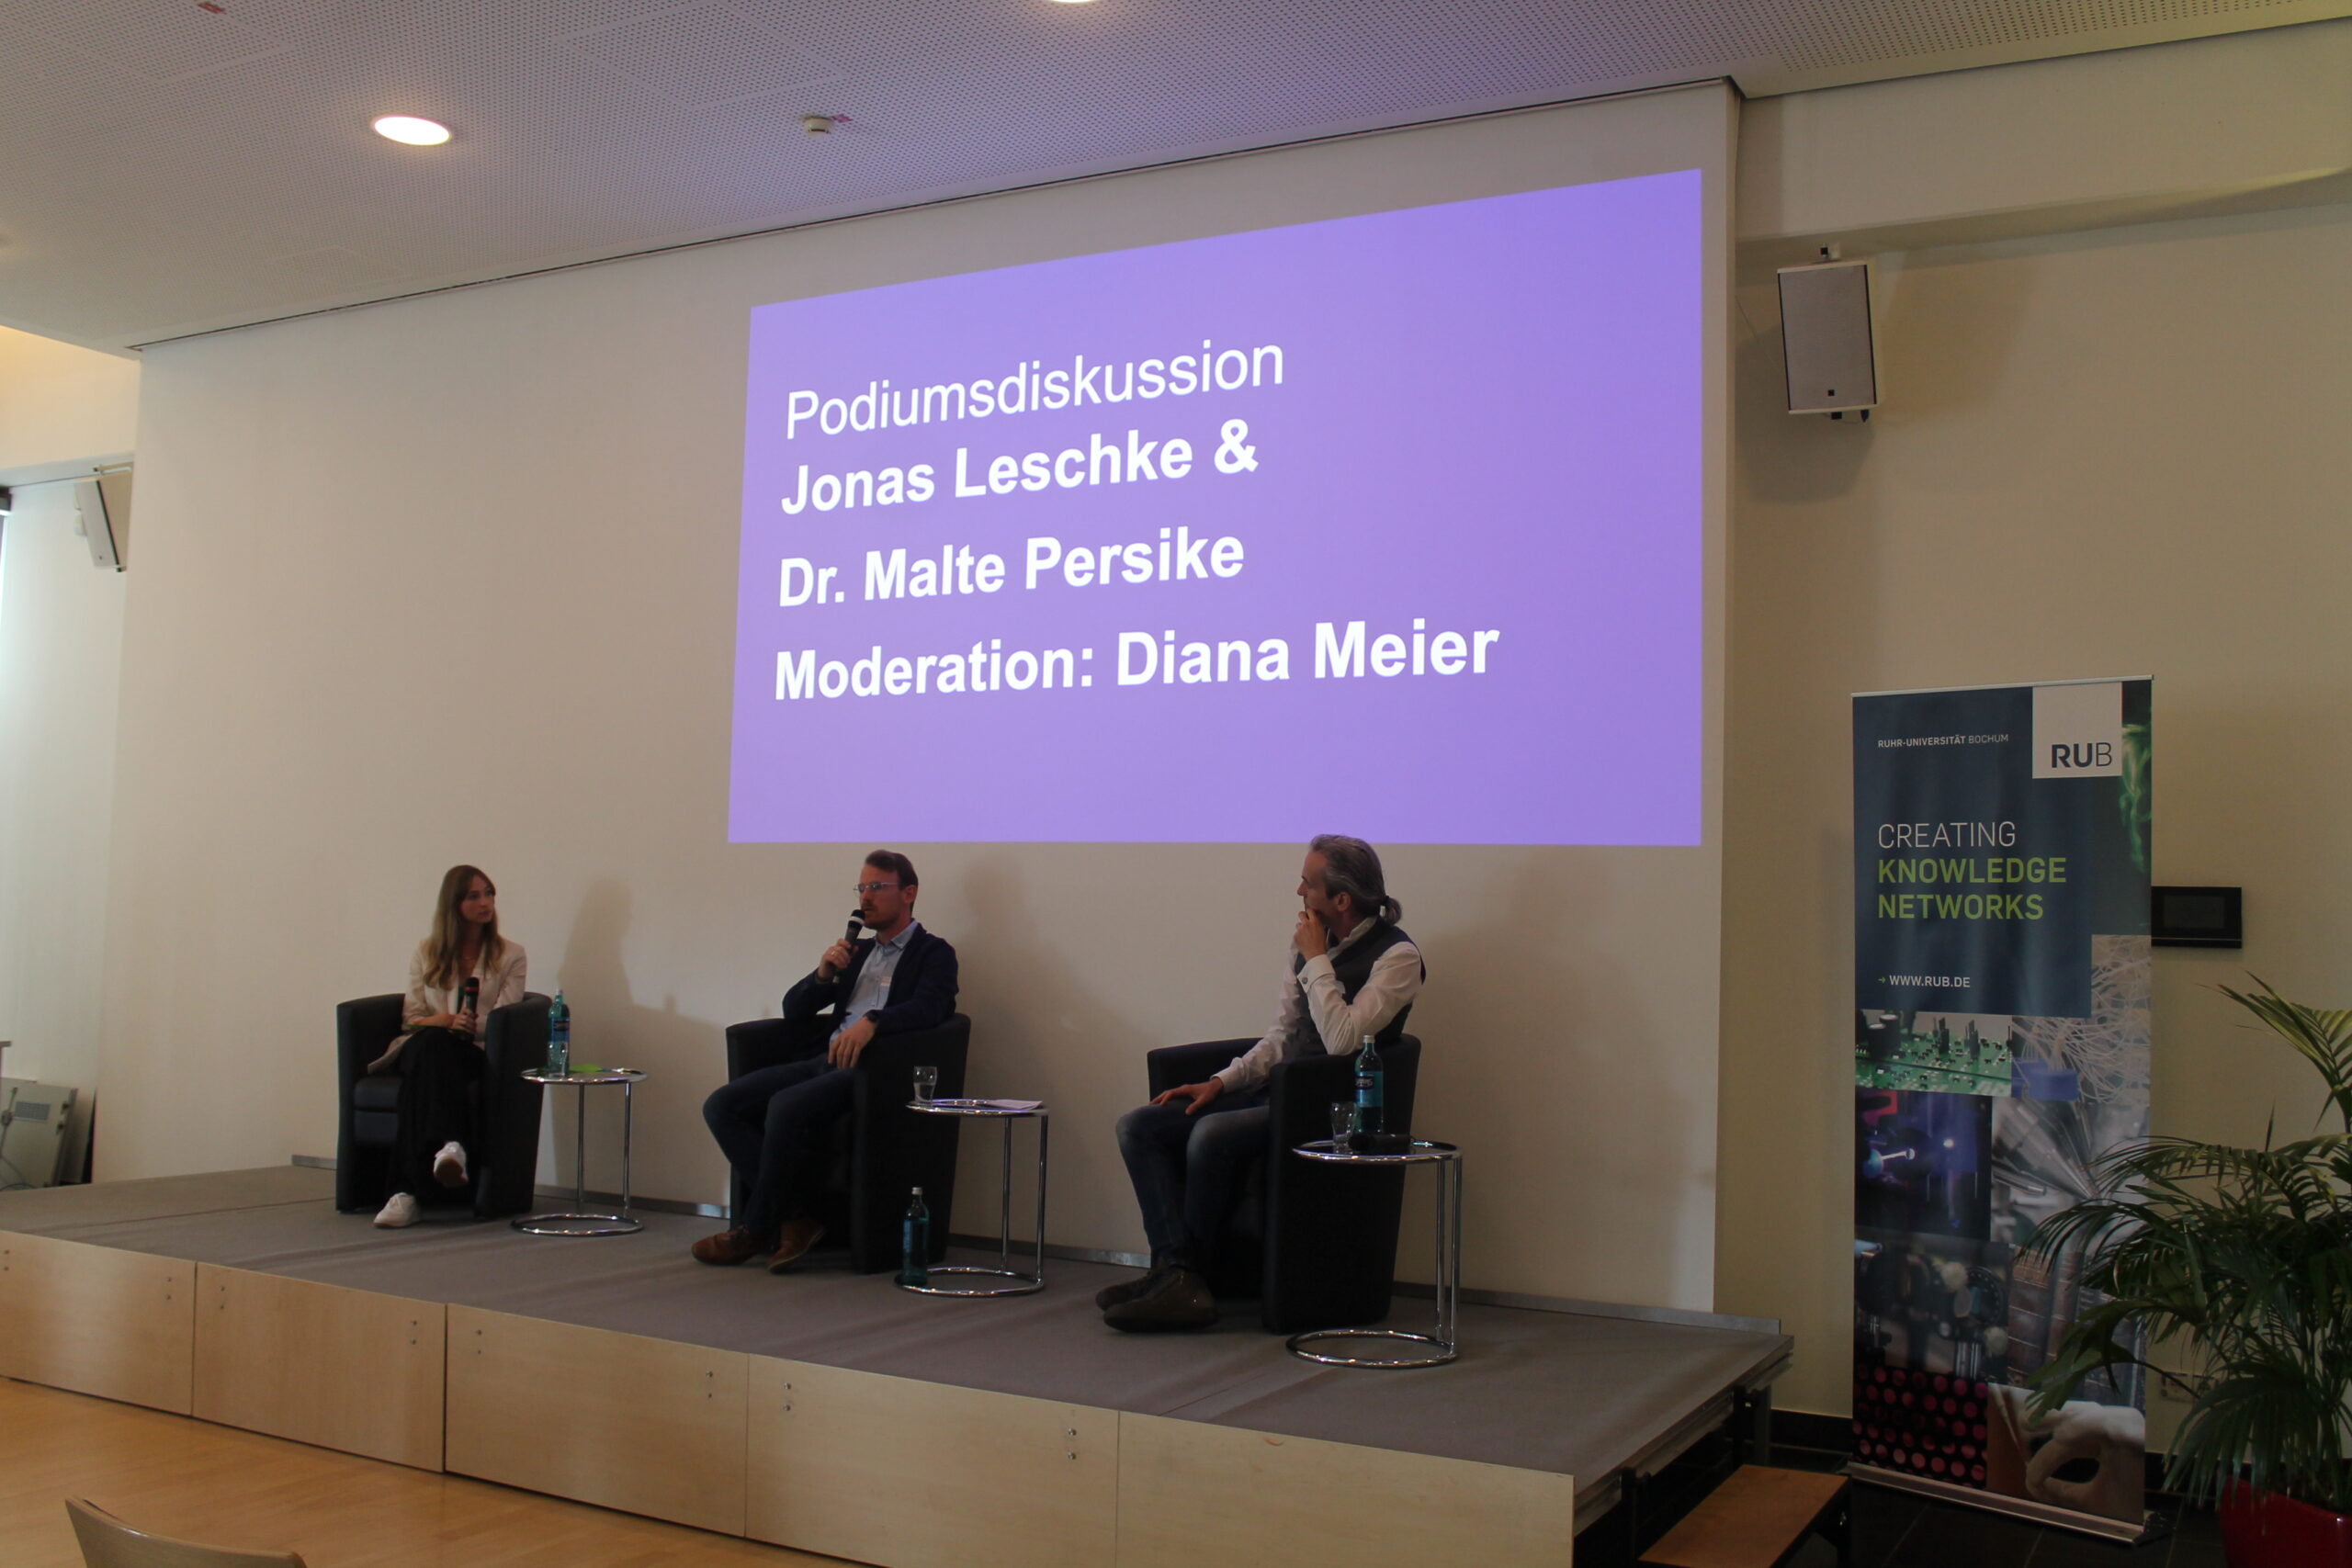 Learning AID am 30.08.2022: Podiumsdiskussion mit Dr. Malte Persike, Jonas Leschke und Diana Meier